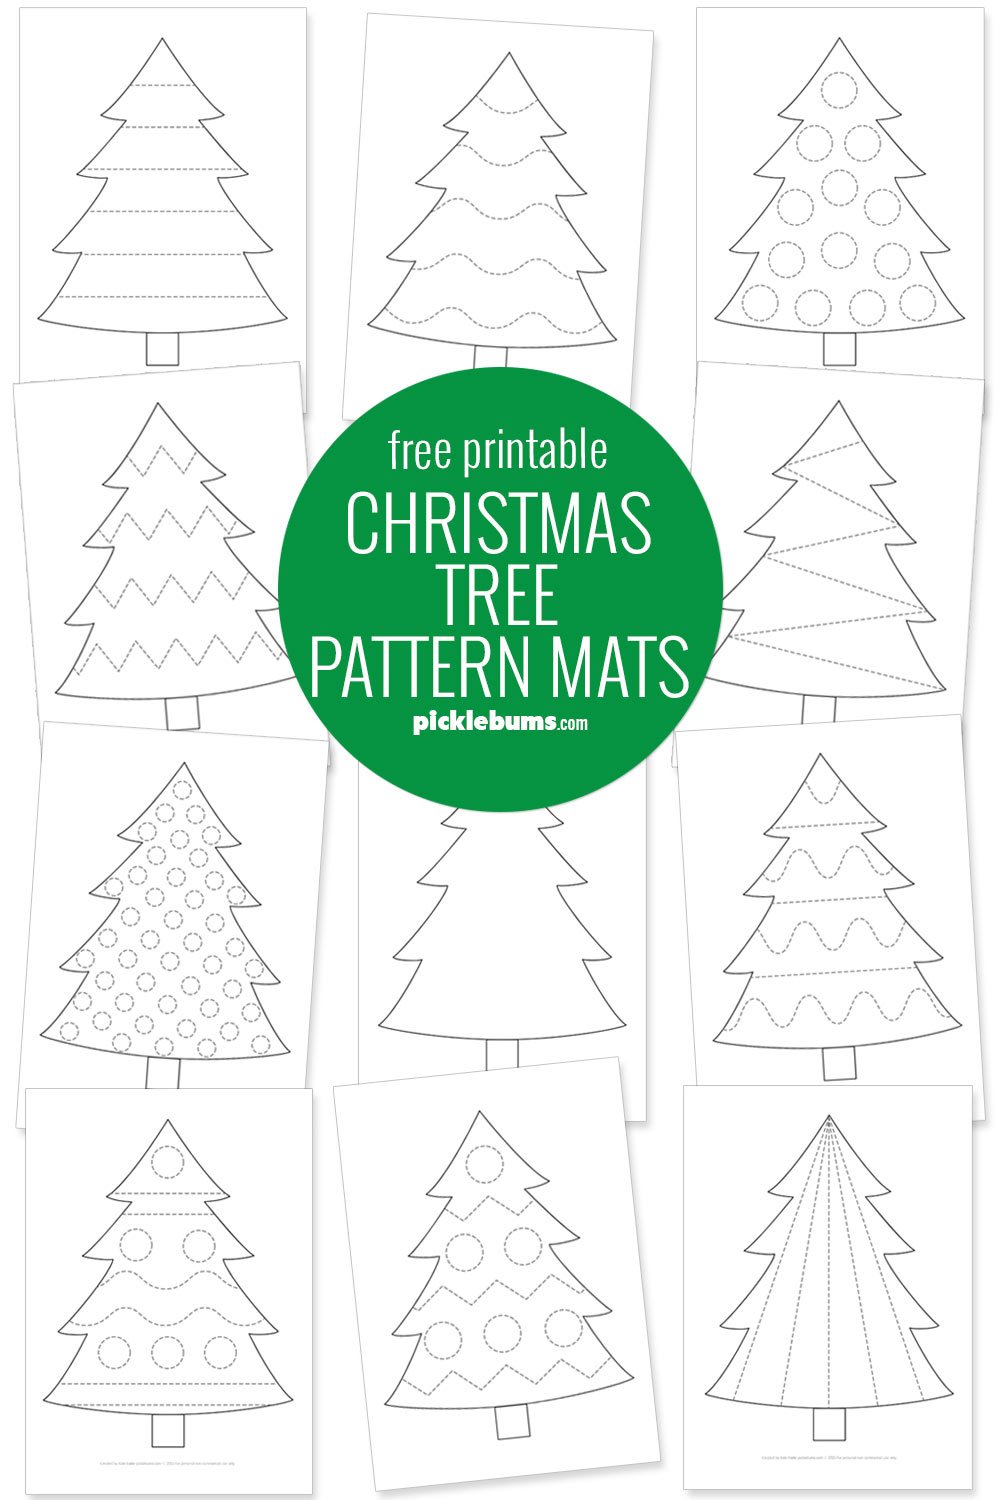 free printable Christmas tree pattern mats